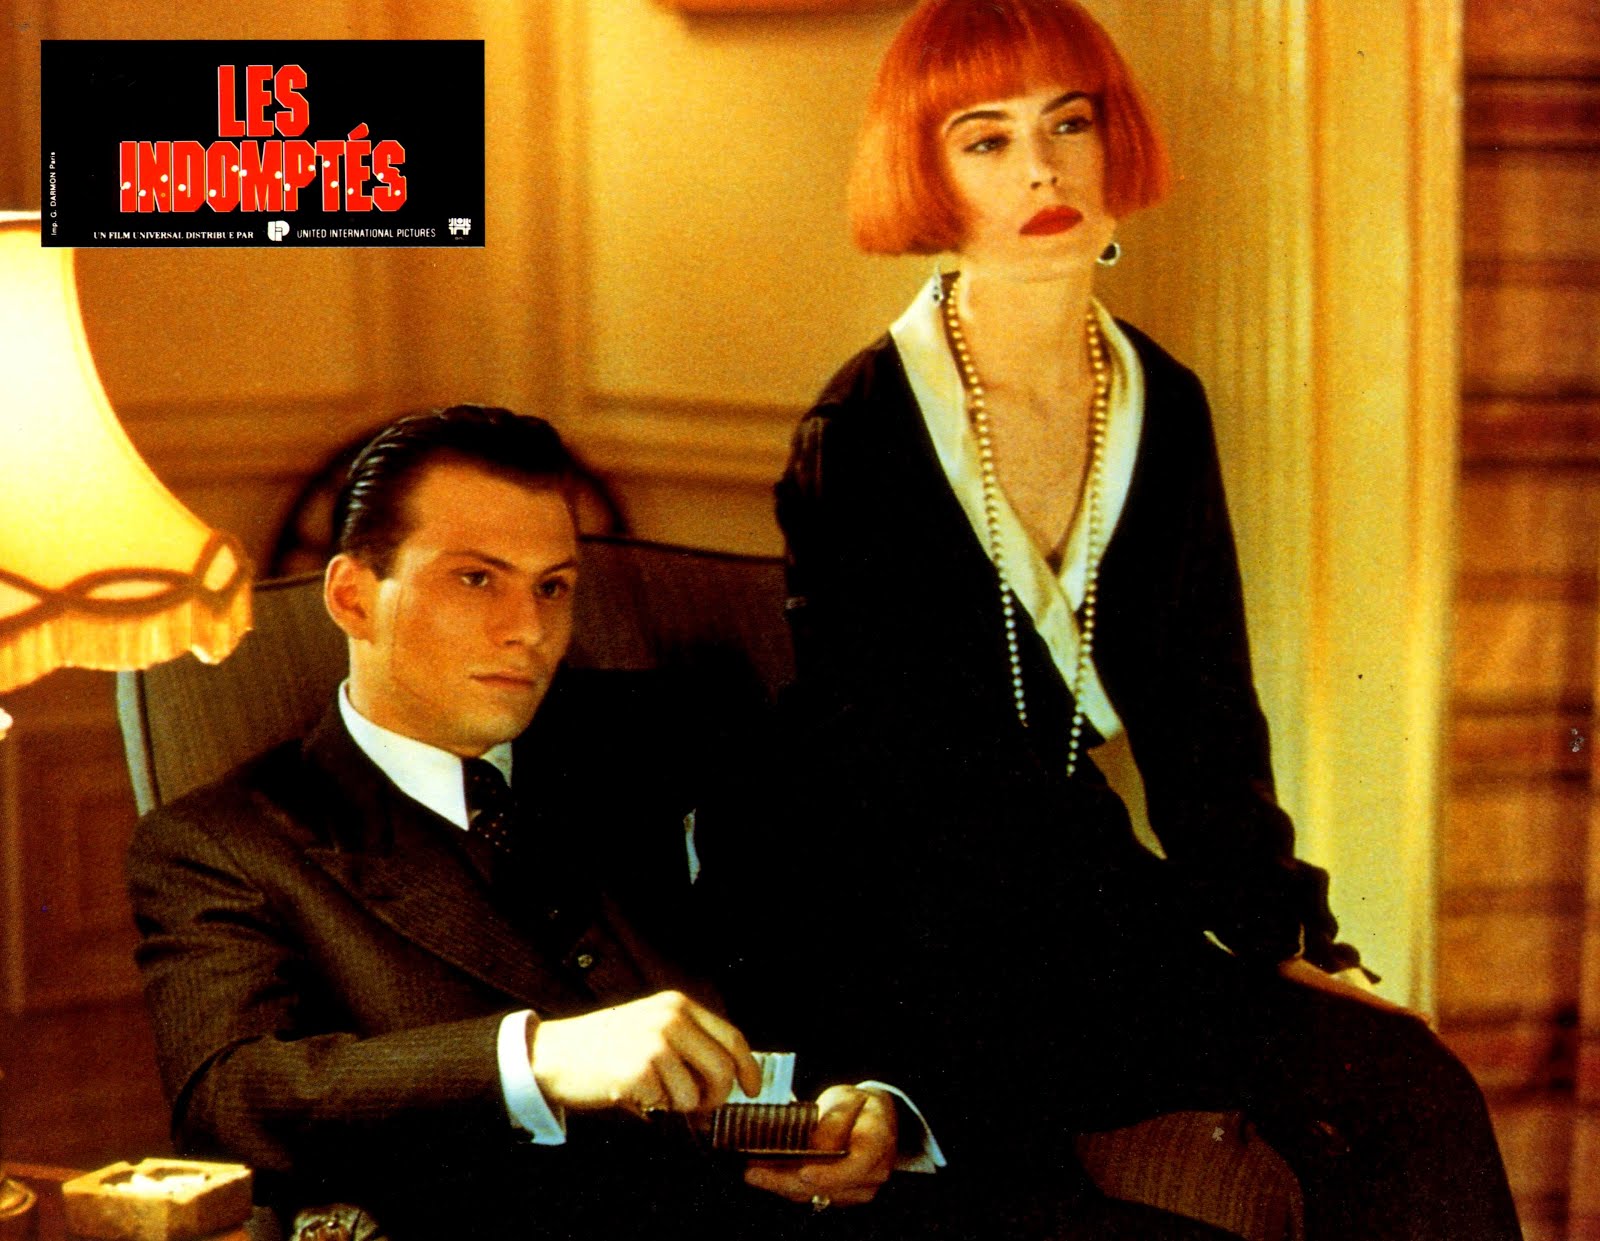 Les indomptés (1991) Michael Karbelnikoff - Mobsters / The evil empire (10.12.1990 / 22.03.1991)